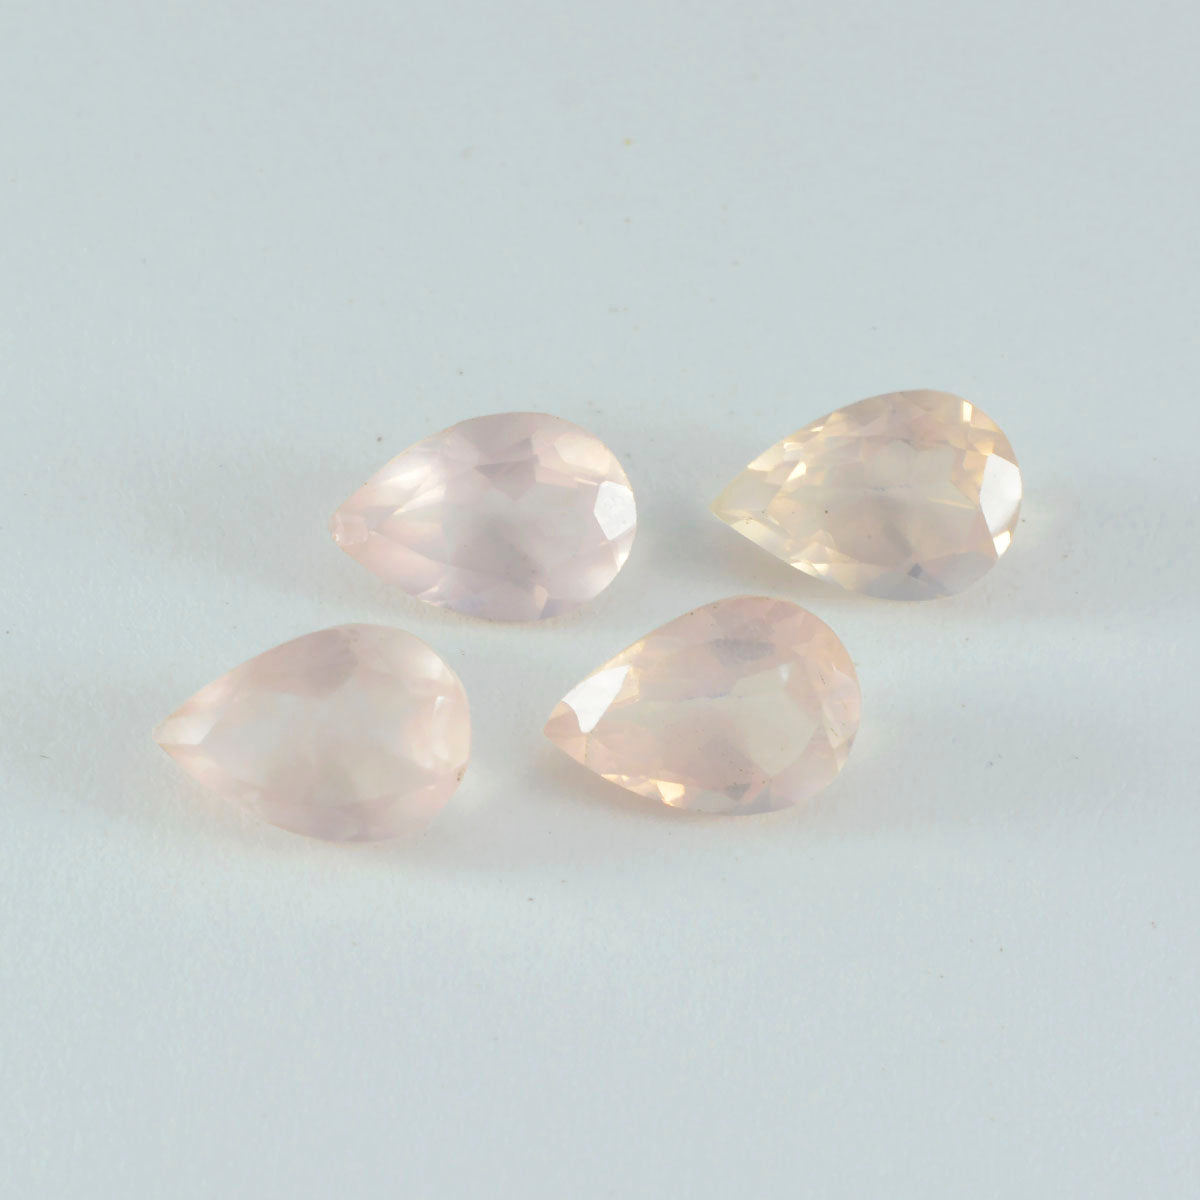 Riyogems 1PC Pink Rose Quartz Faceted 8x12 mm Pear Shape amazing Quality Loose Gems